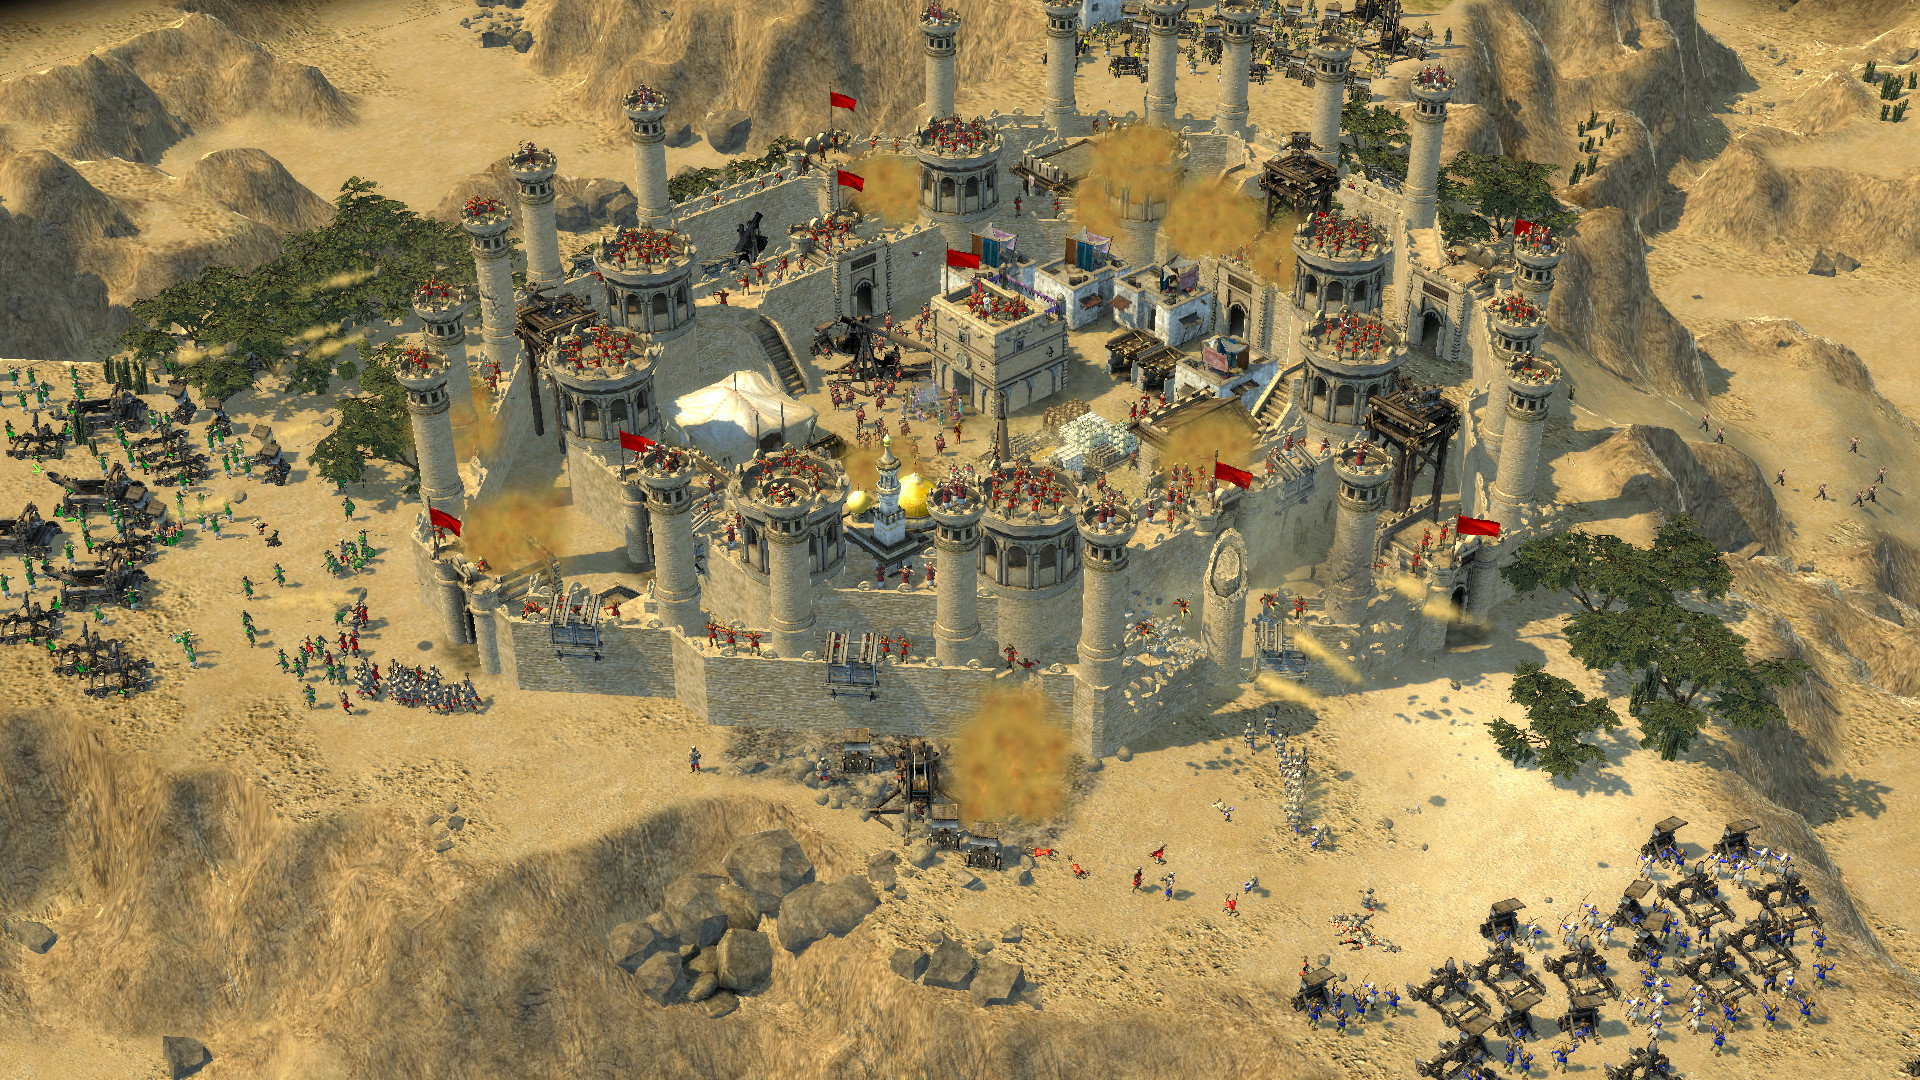 stronghold crusader maps